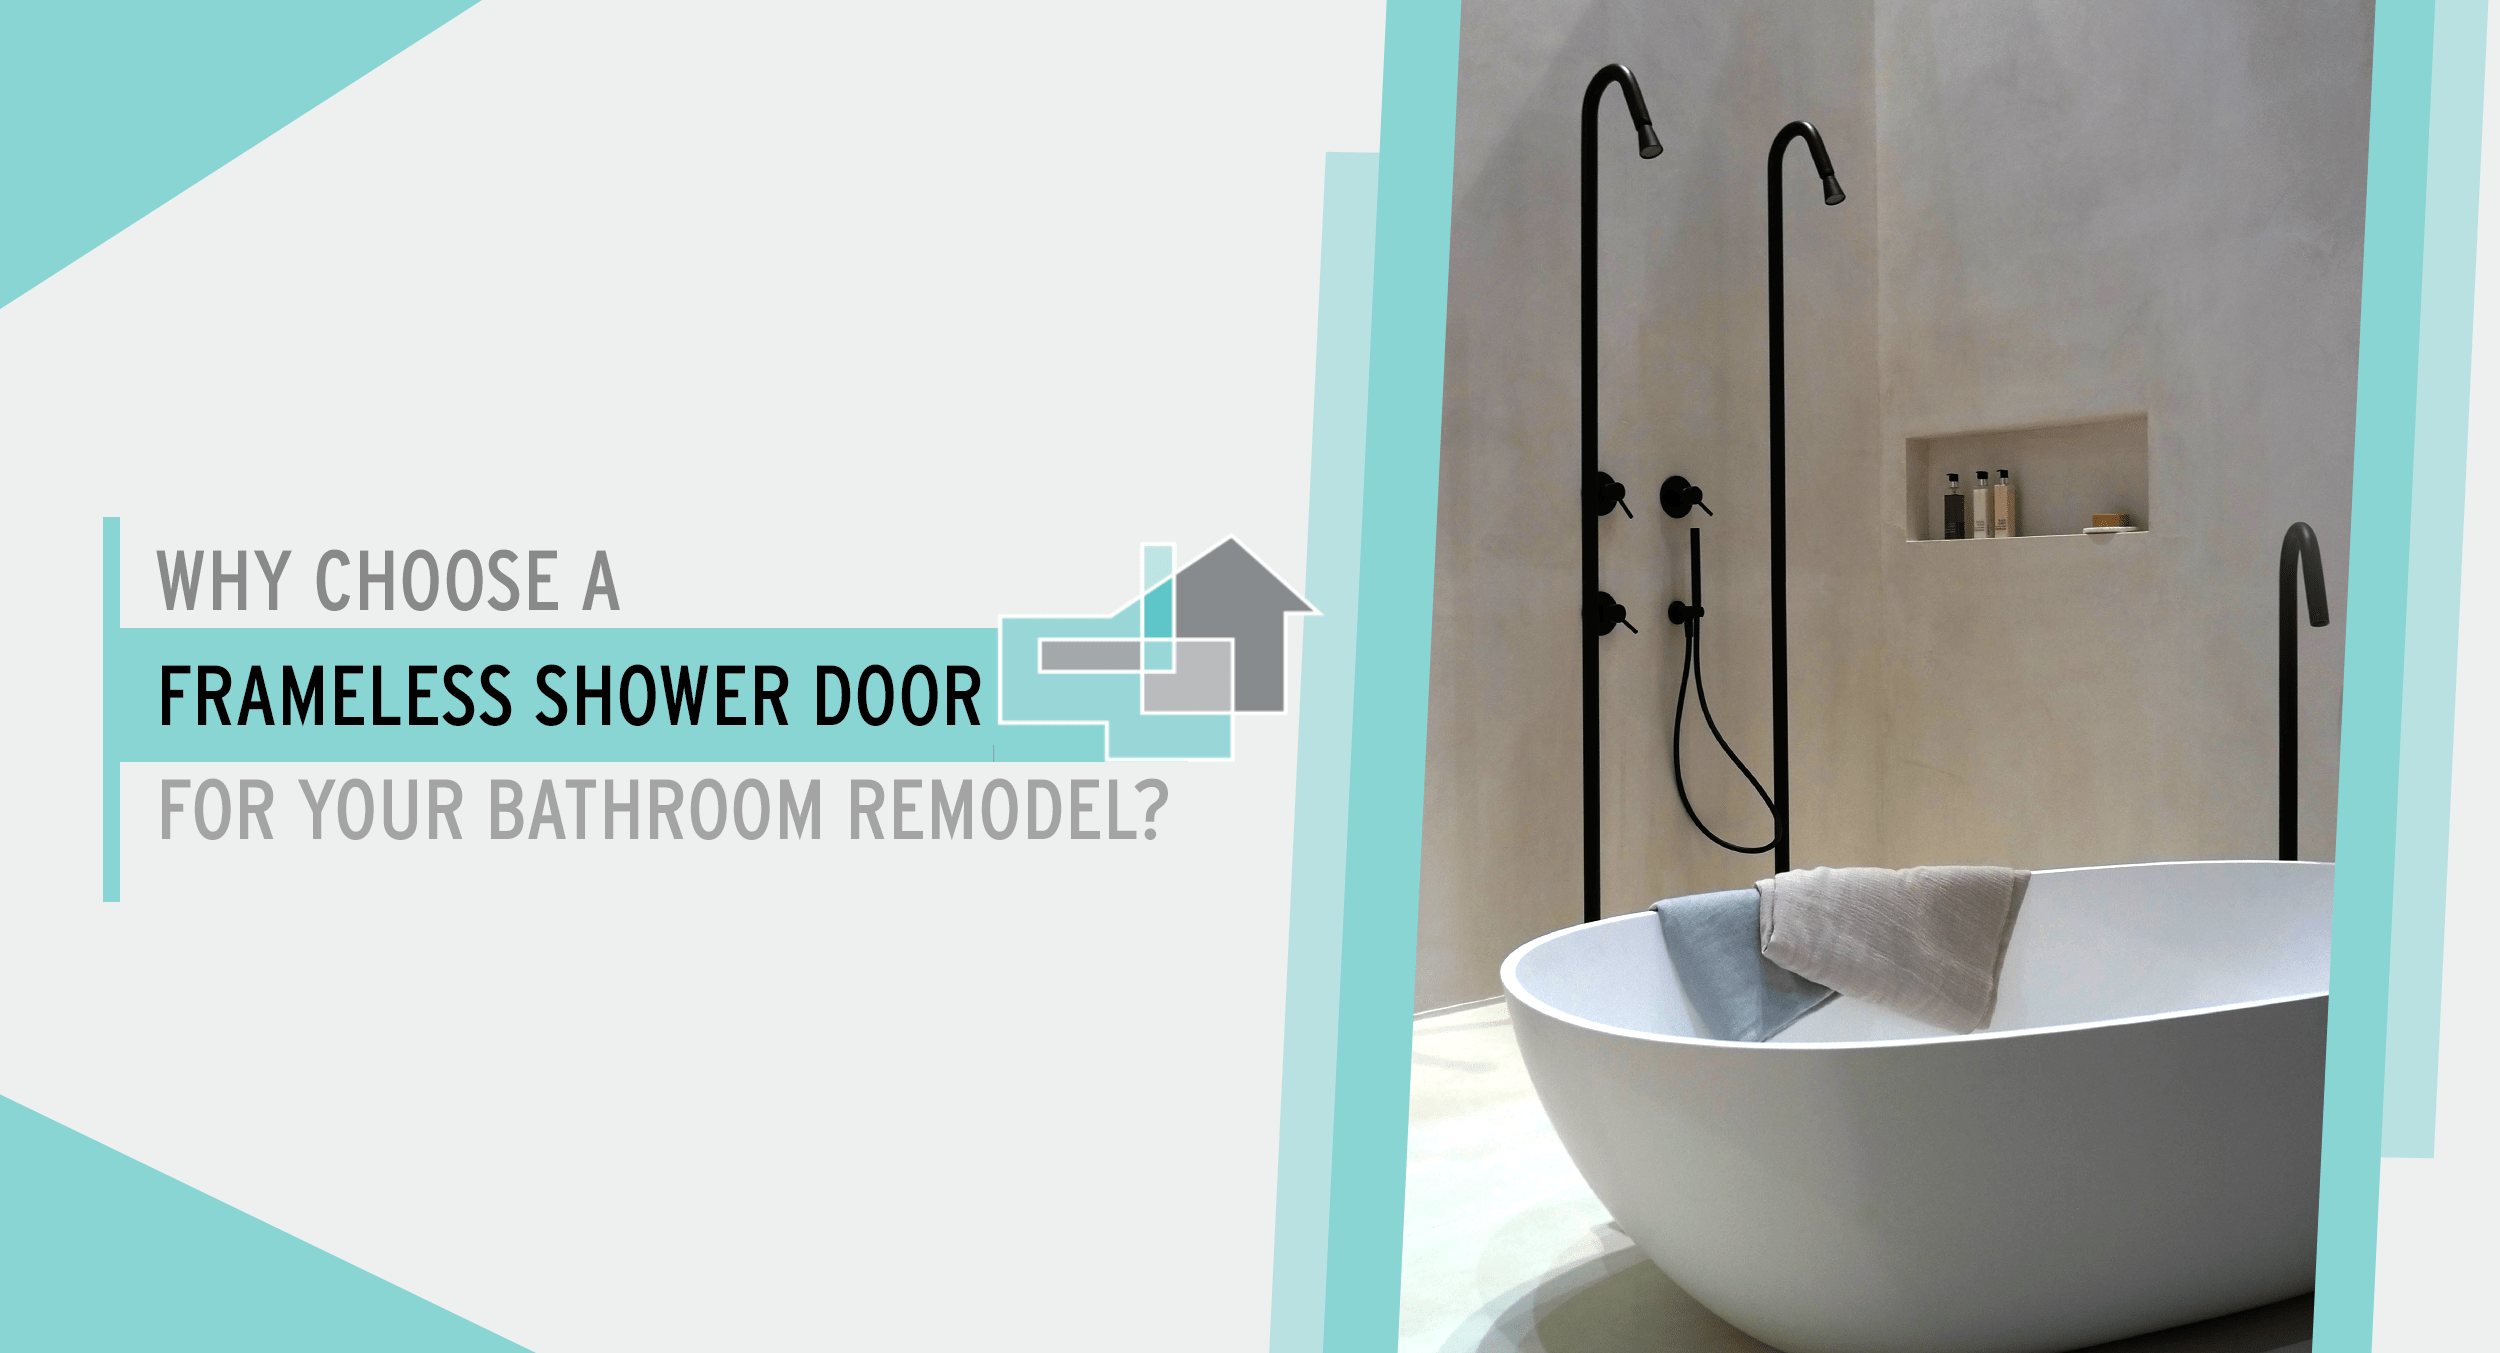 Why Choose a Frameless Shower Door for Your Bathroom Remodel?